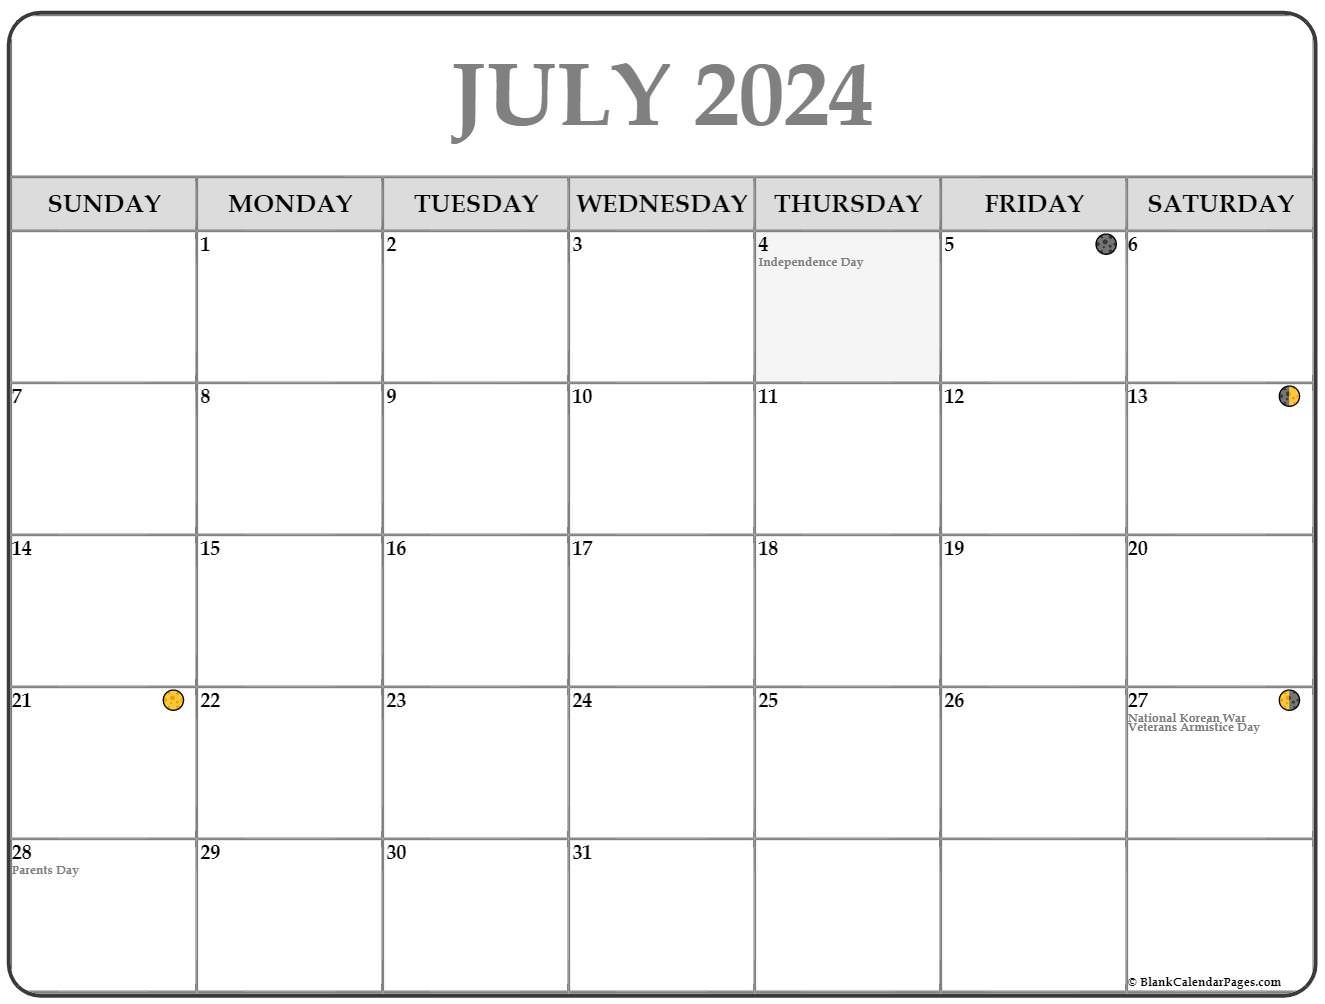 July 2024 Lunar Calendar | Moon Phase Calendar | July Calendar With Moon Phases 2024